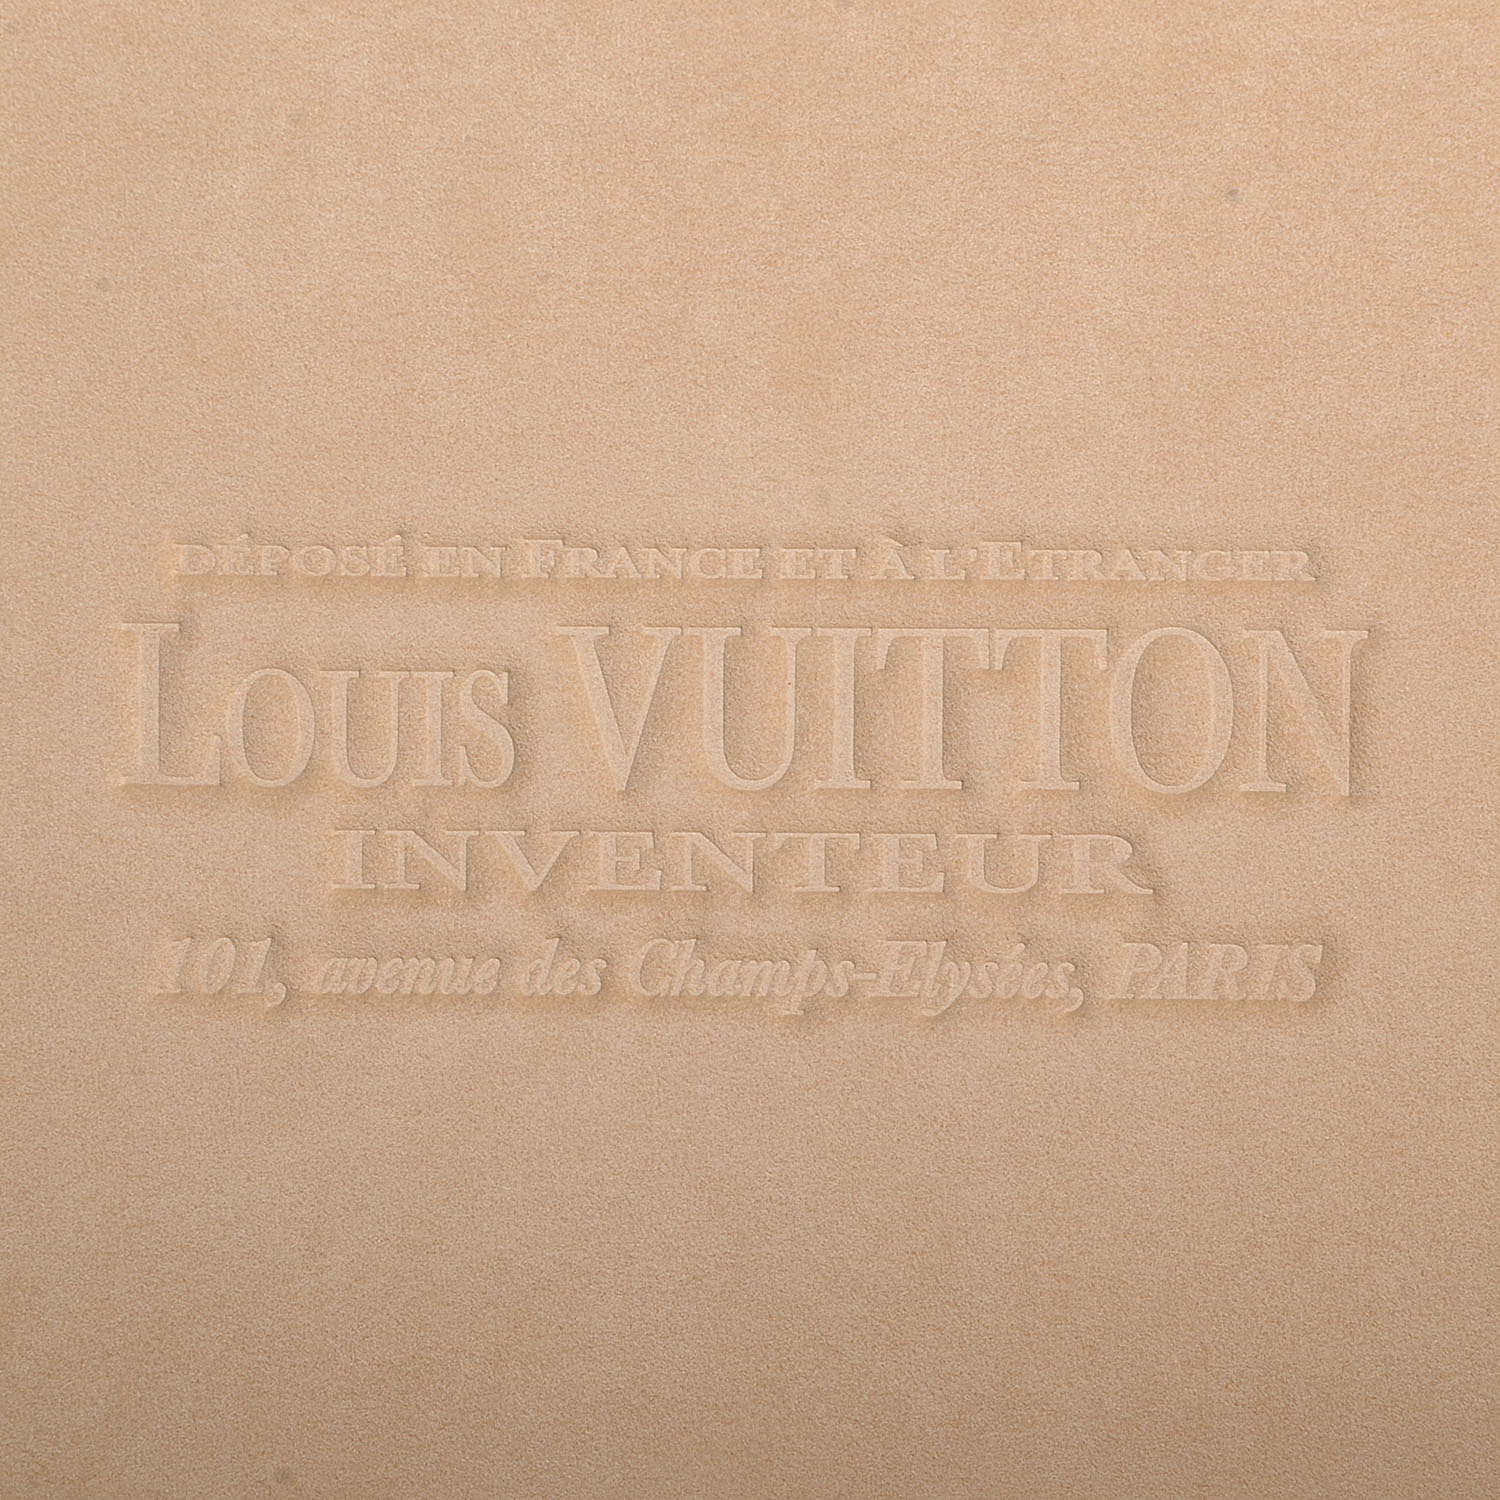 LOUIS VUITTON Monogram 15 inch Laptop Sleeve 88076